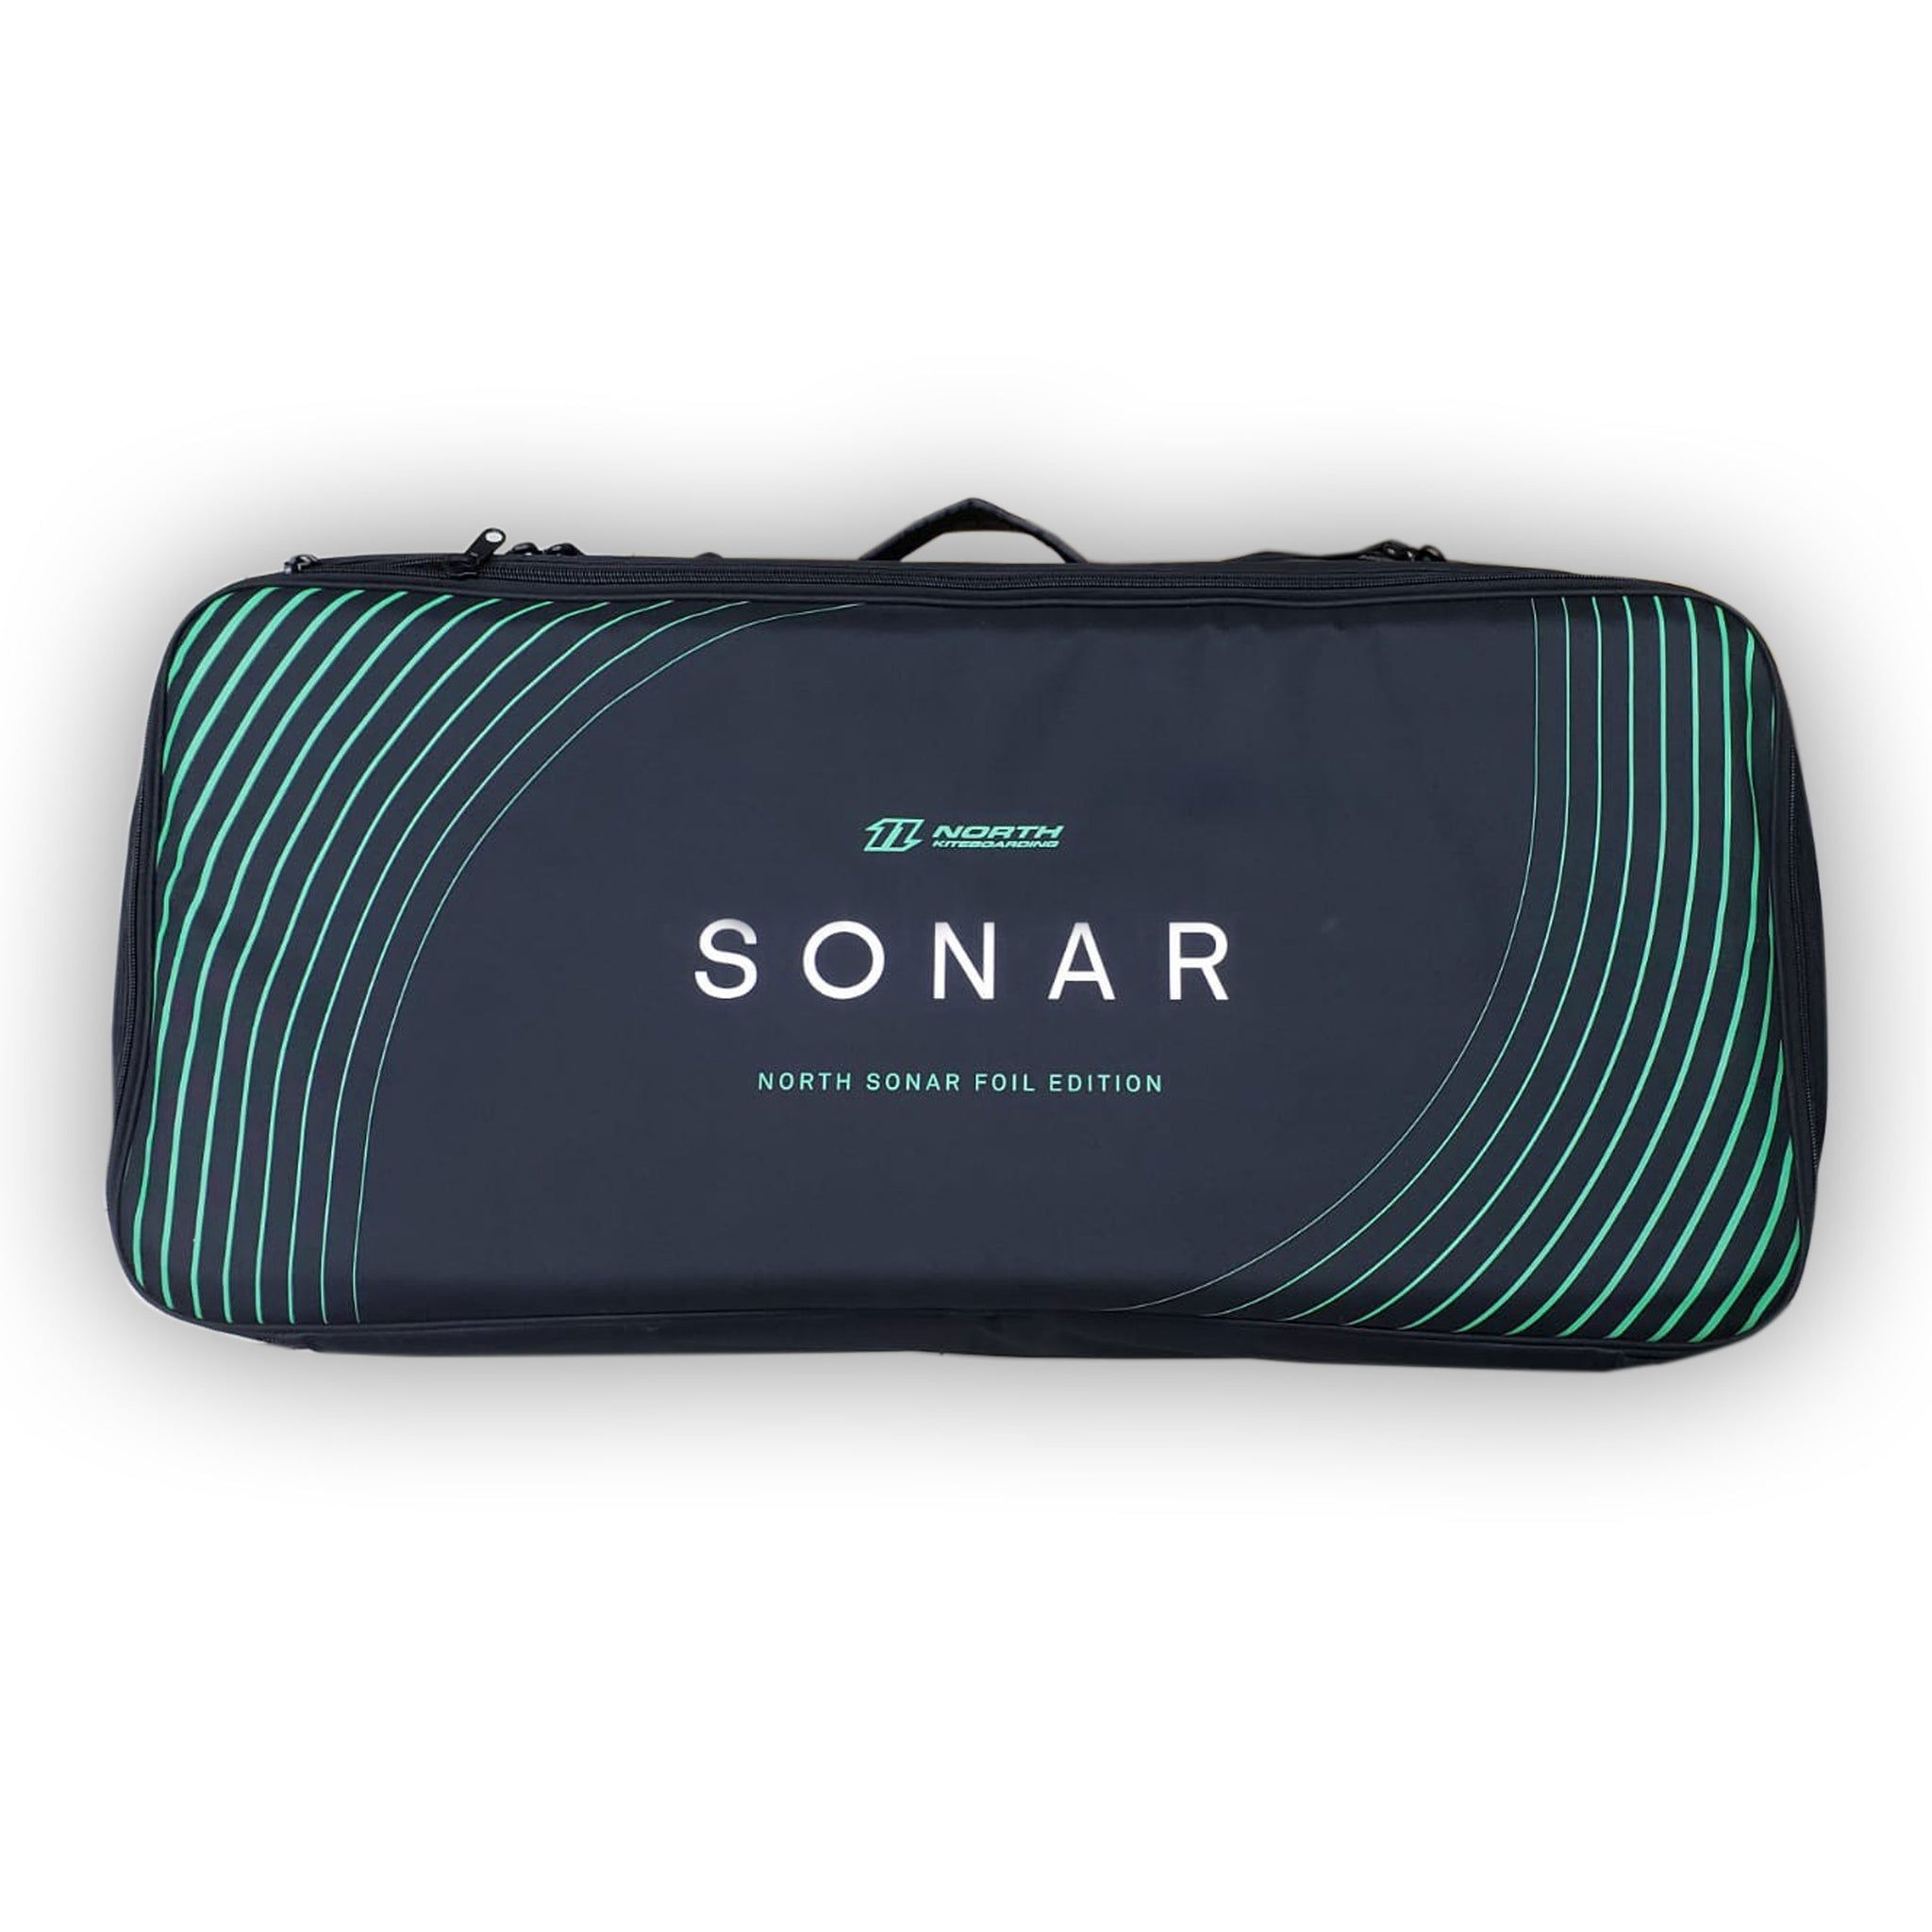 North Sonar Travel bag 2020